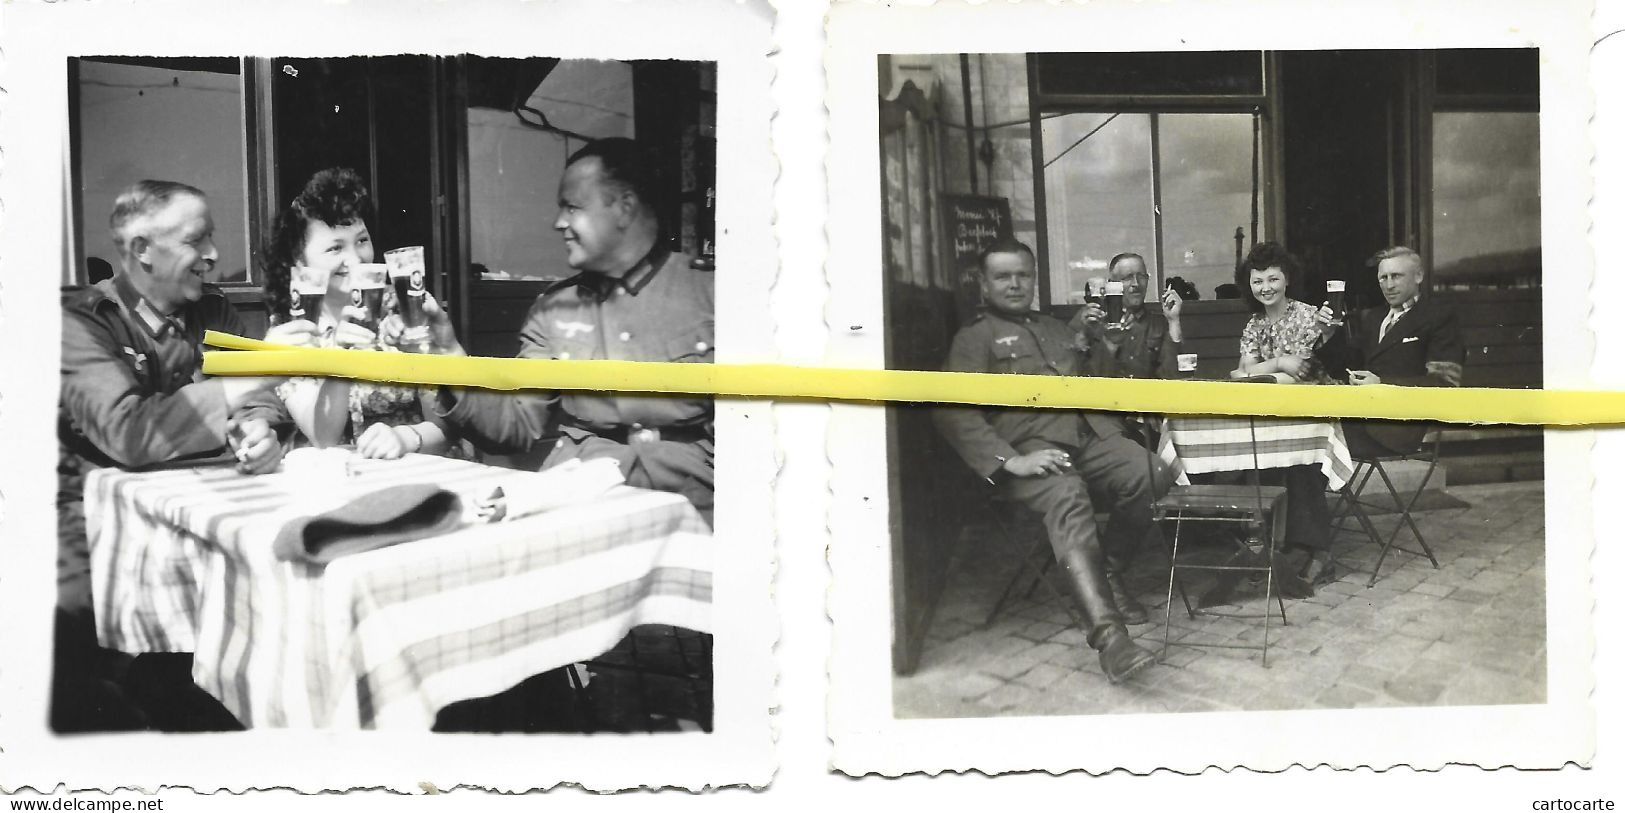 08 513 0524 WW2 WK2 ARDENNES  RETHEL A CONFIRMER CAFE OFFICIERS ALLEMANDS 1940 / 1944 - Guerre, Militaire